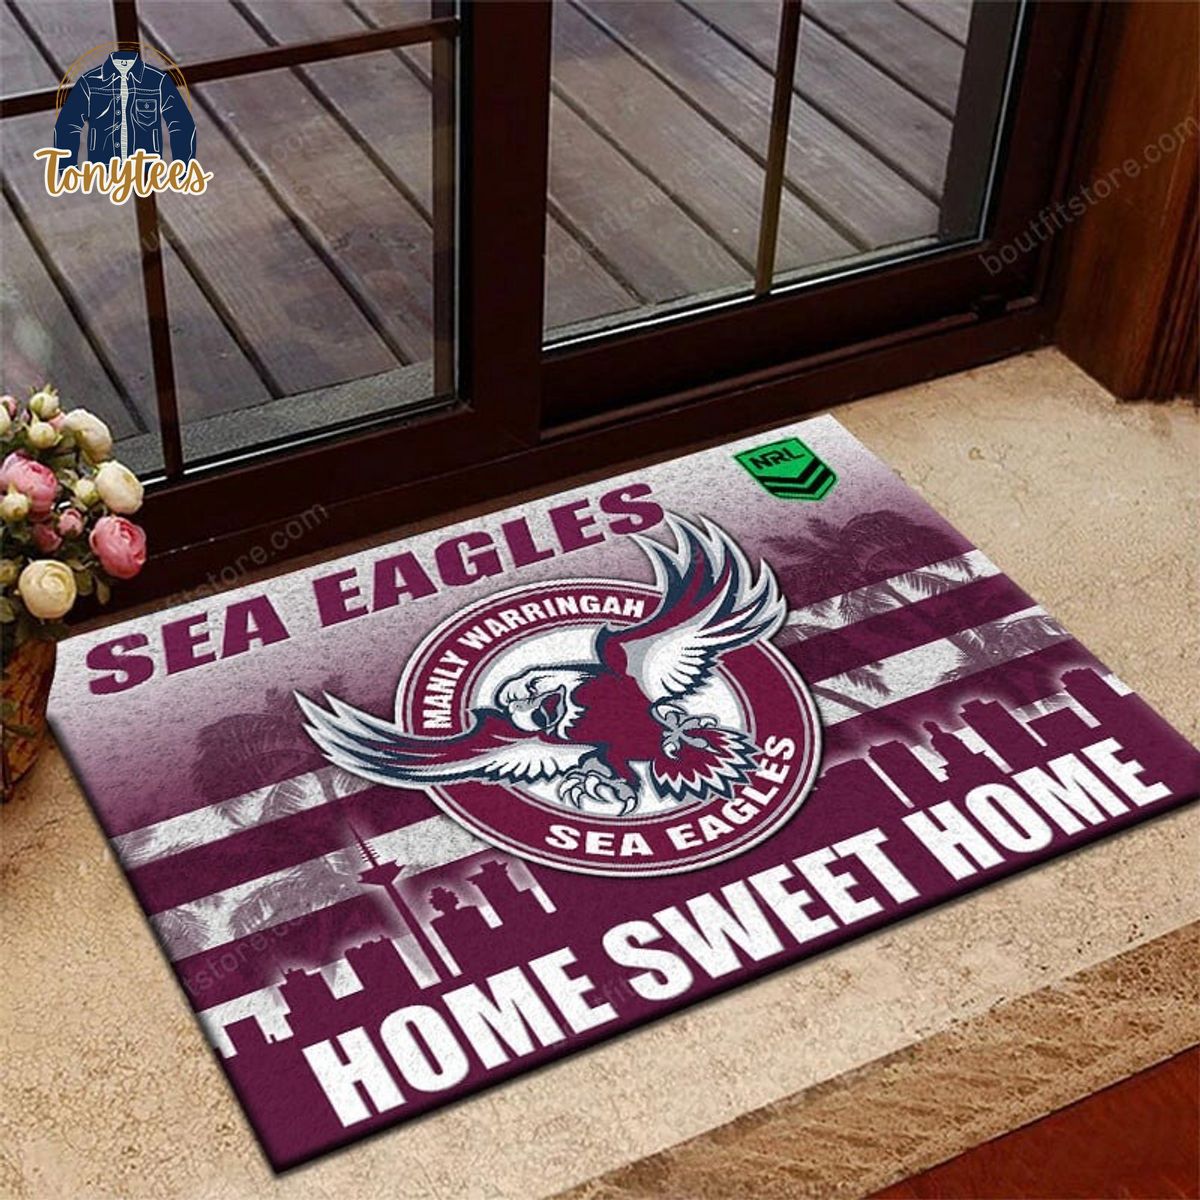 NRL Manly Warringah Sea Eagles Home Sweet Home Doormat